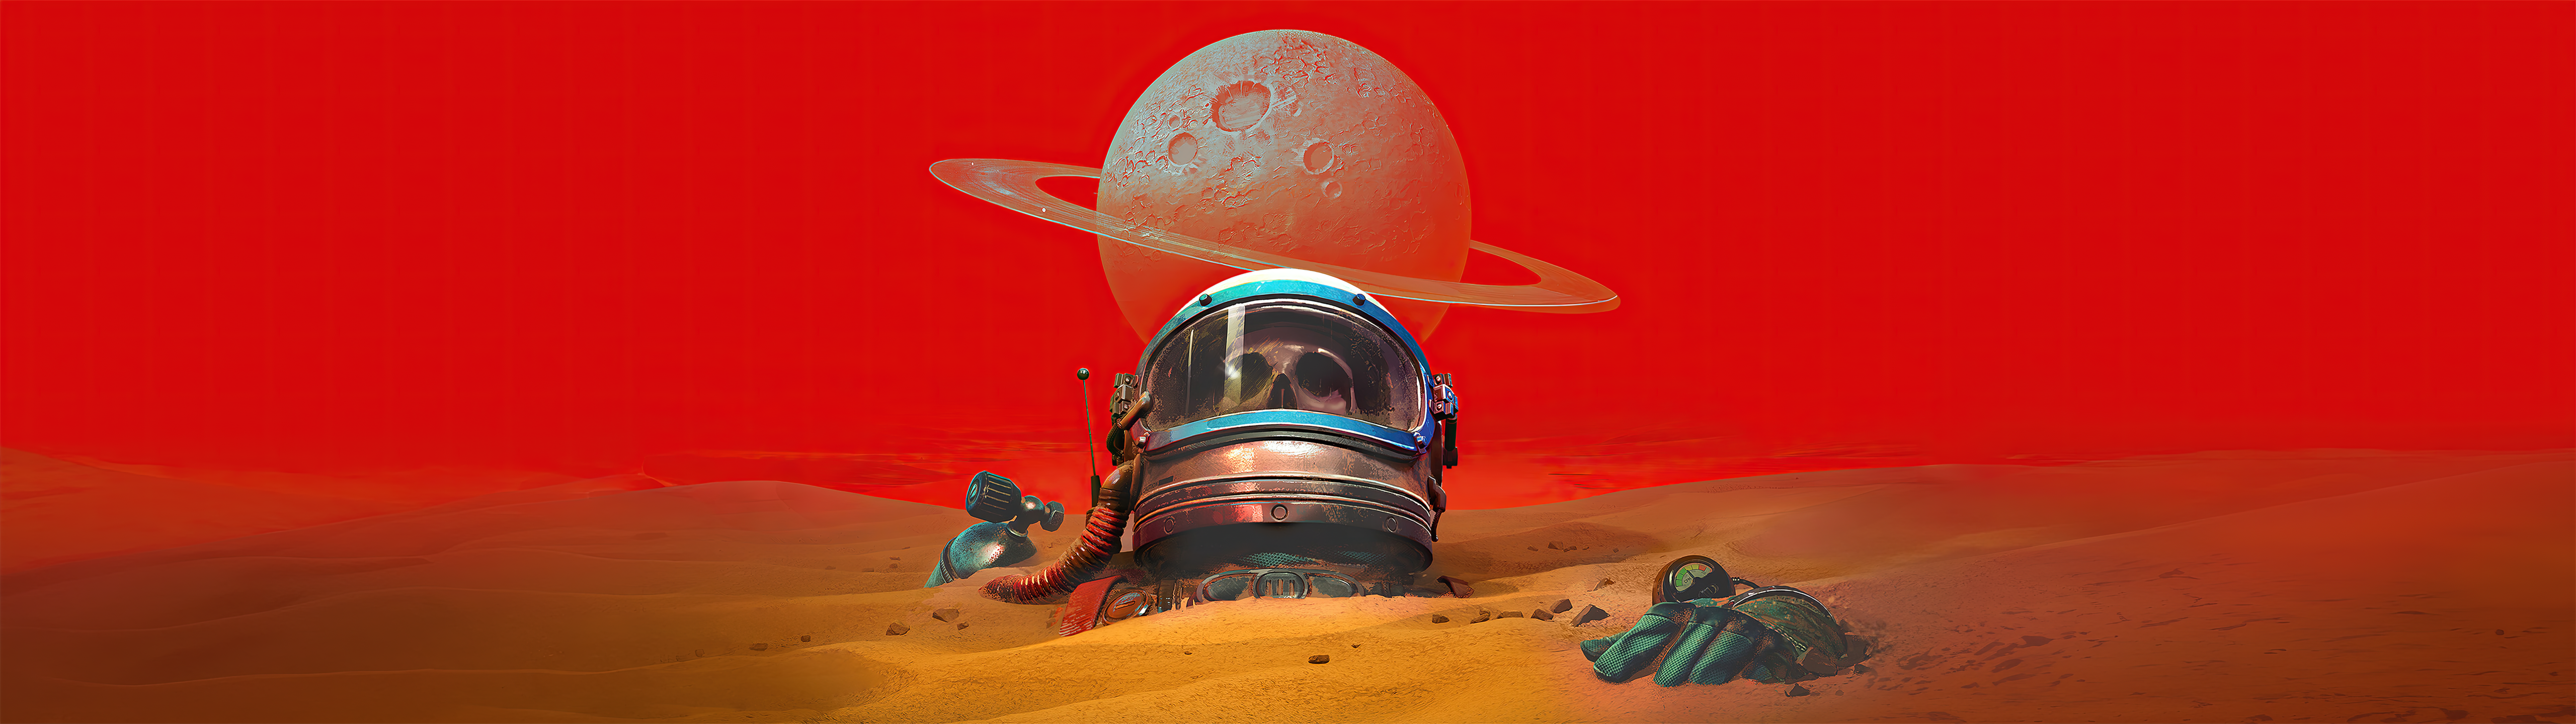 Video Game Art Ultrawide Wide Screen Spacesuit Helmet Astronaut Simple Background Planet Minimalism  5120x1440